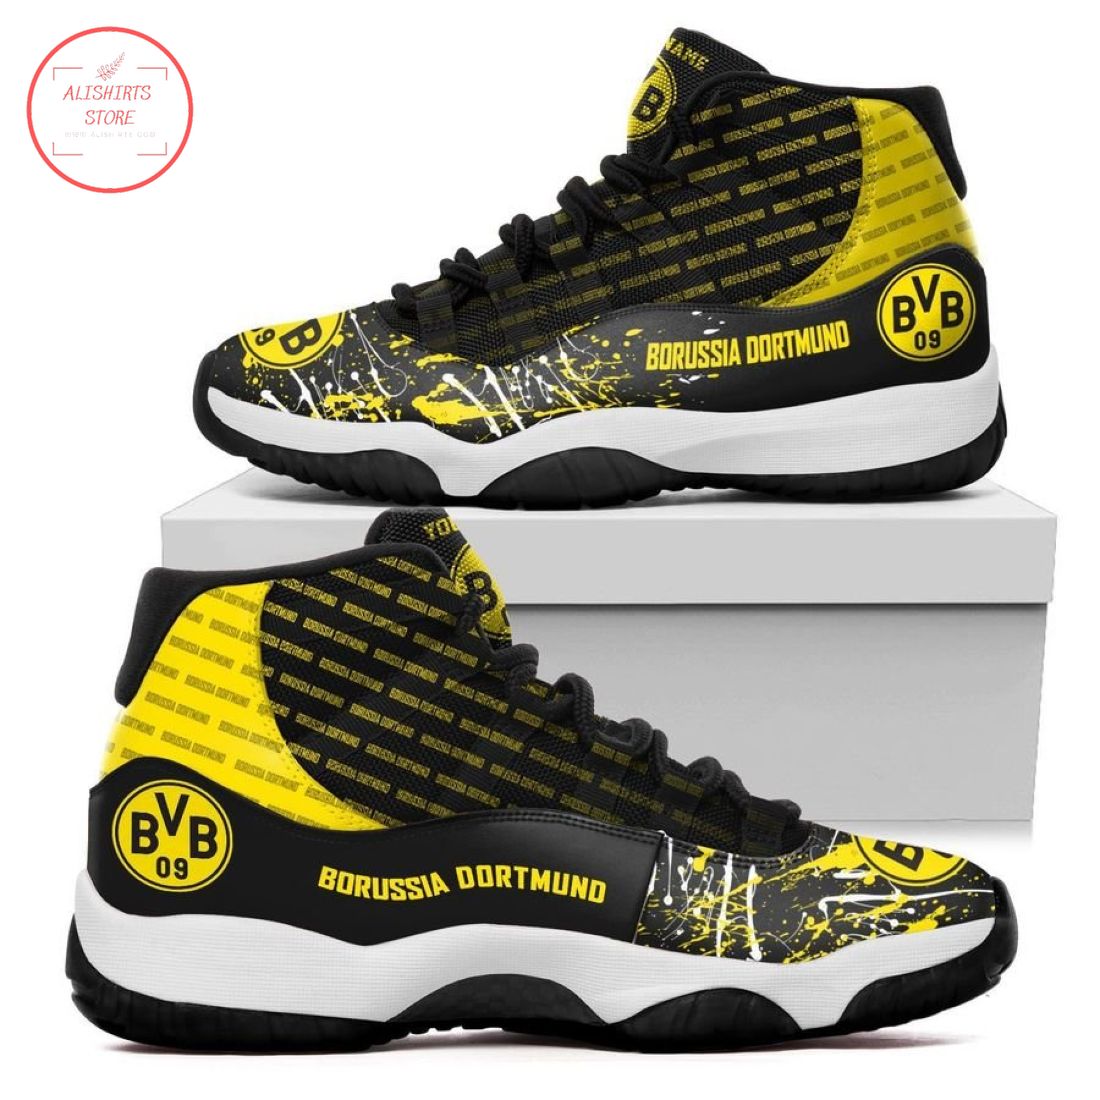 Borussia Dortmund Customized New Air Jordan 11 Sneakers Shoes